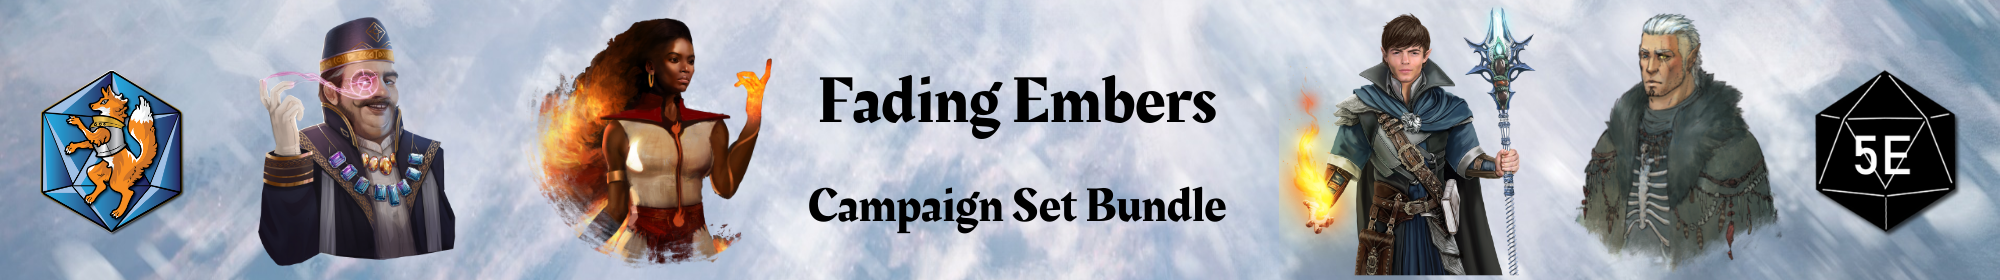 Fading Embers Campaign Set [BUNDLE]